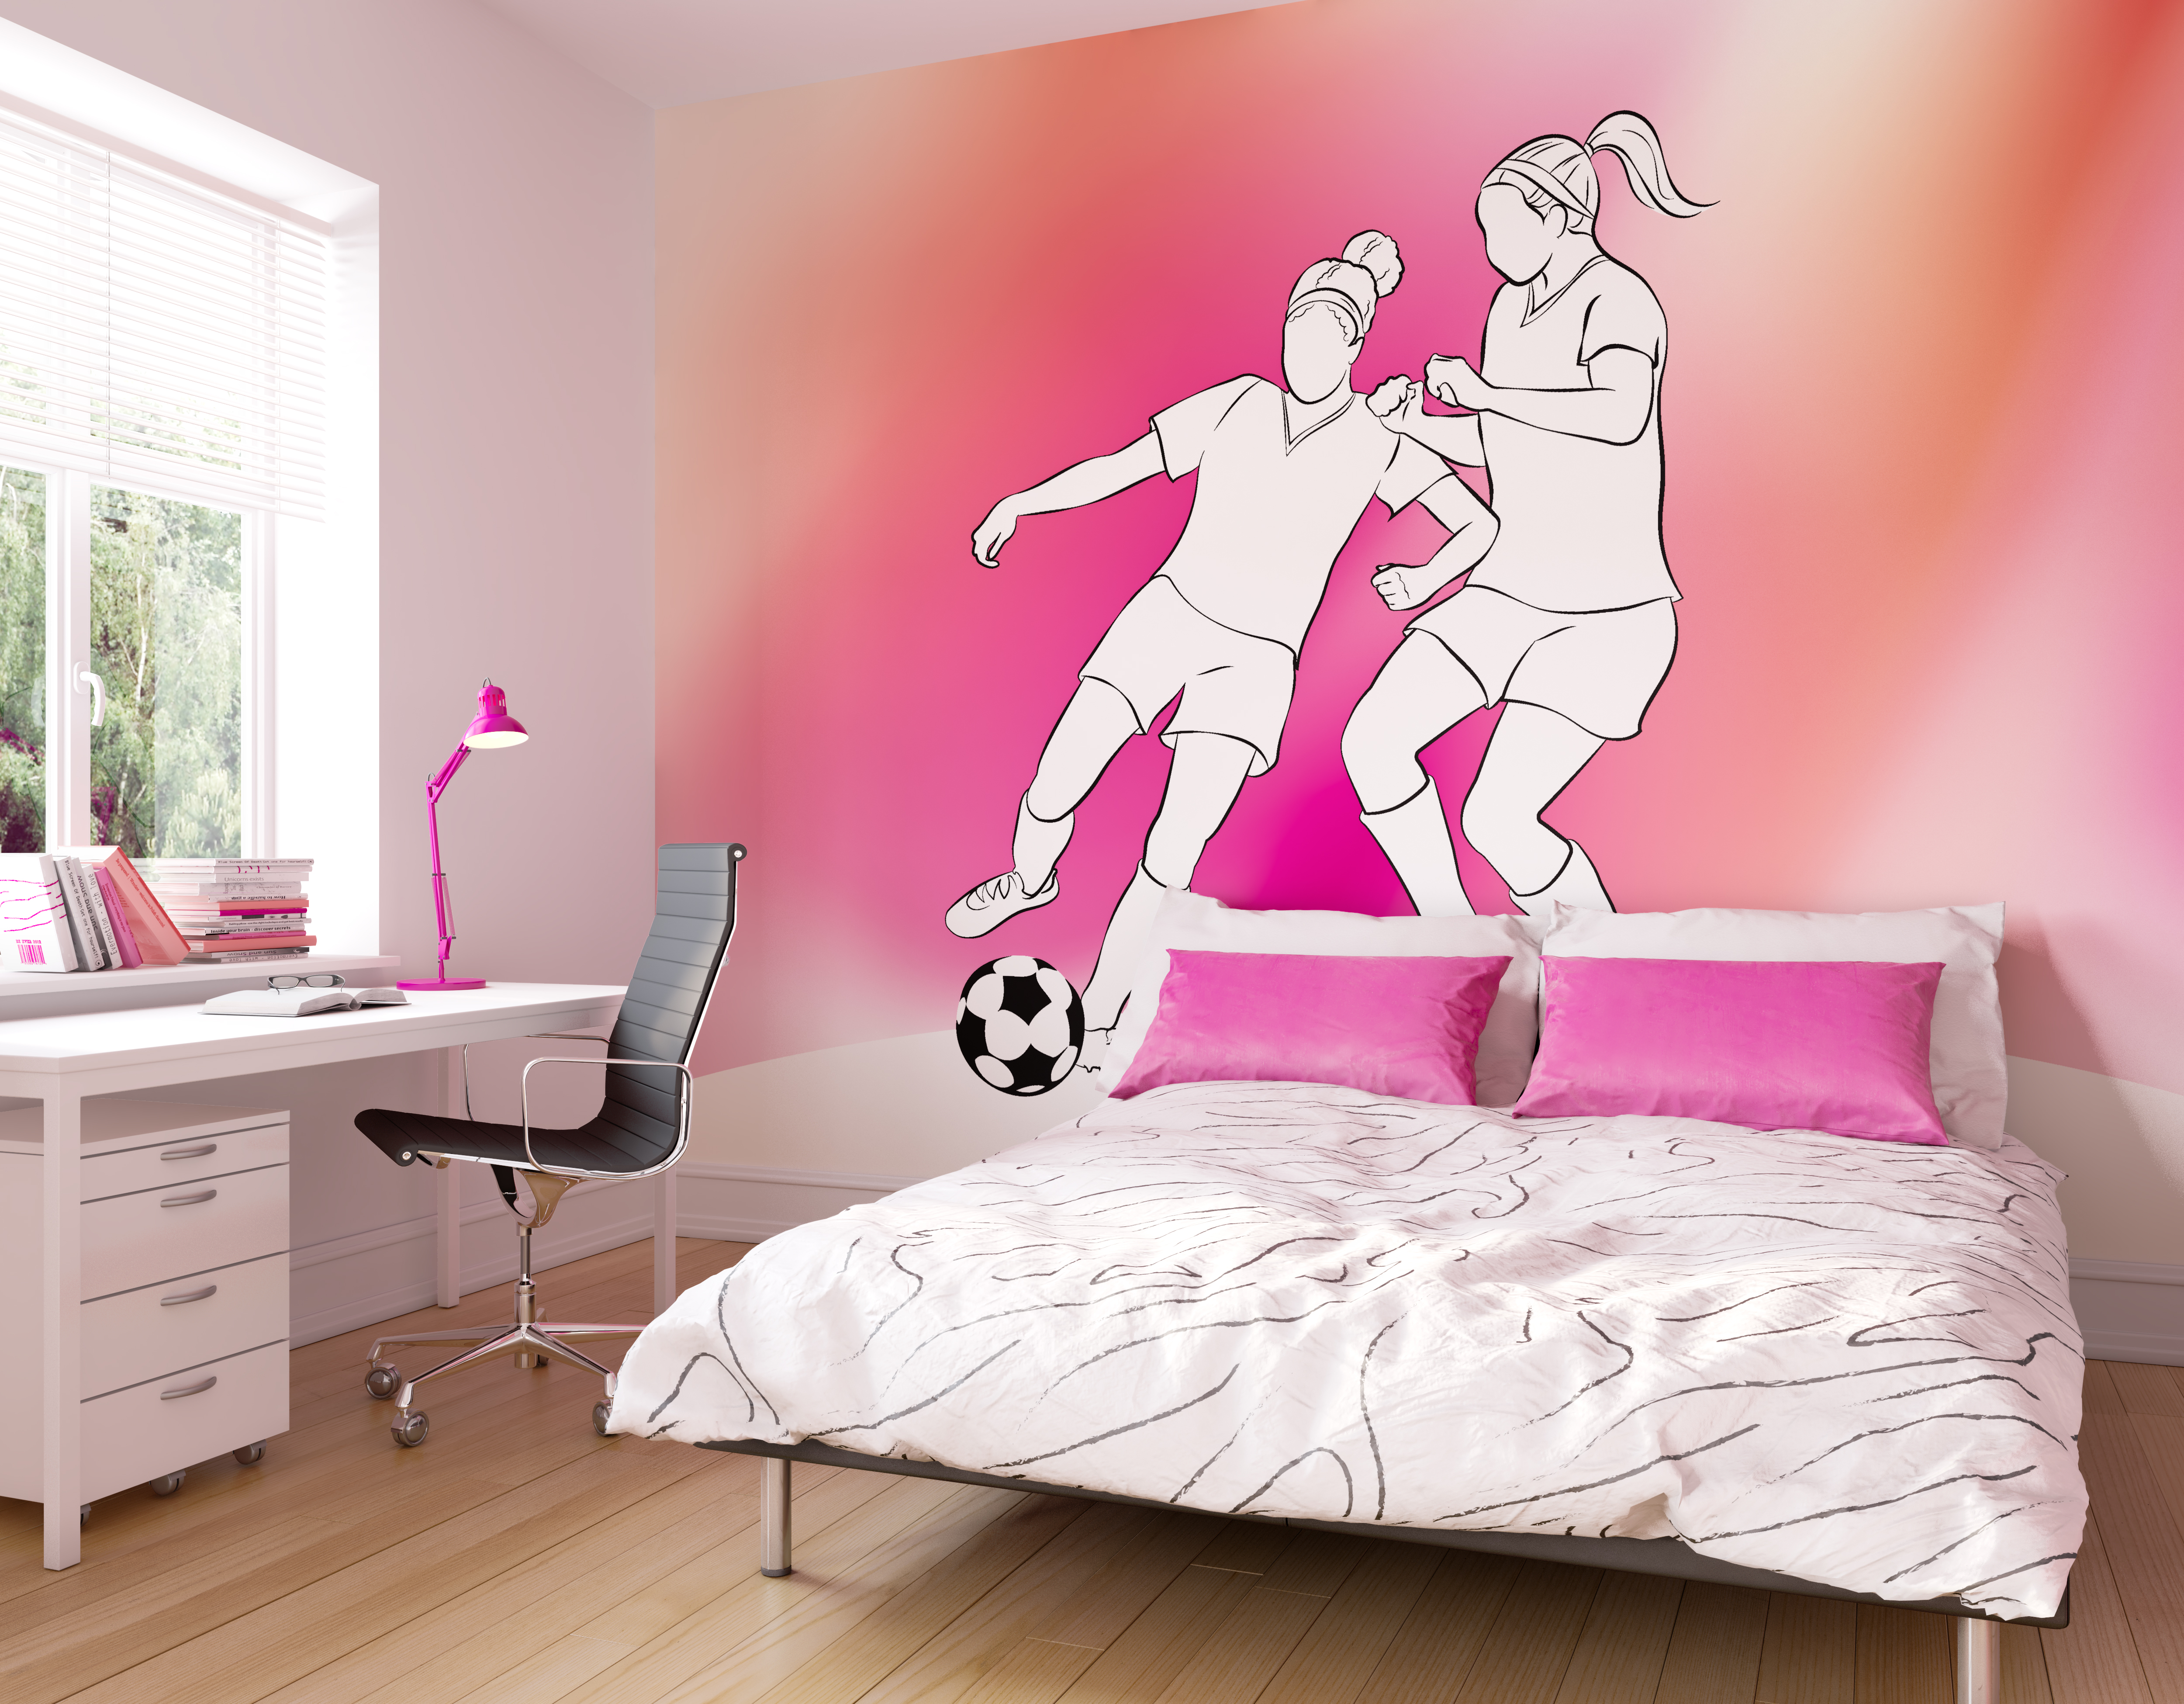 Fototapet Girls Playing Football M, Pink, Origin Murals, 300x240cm